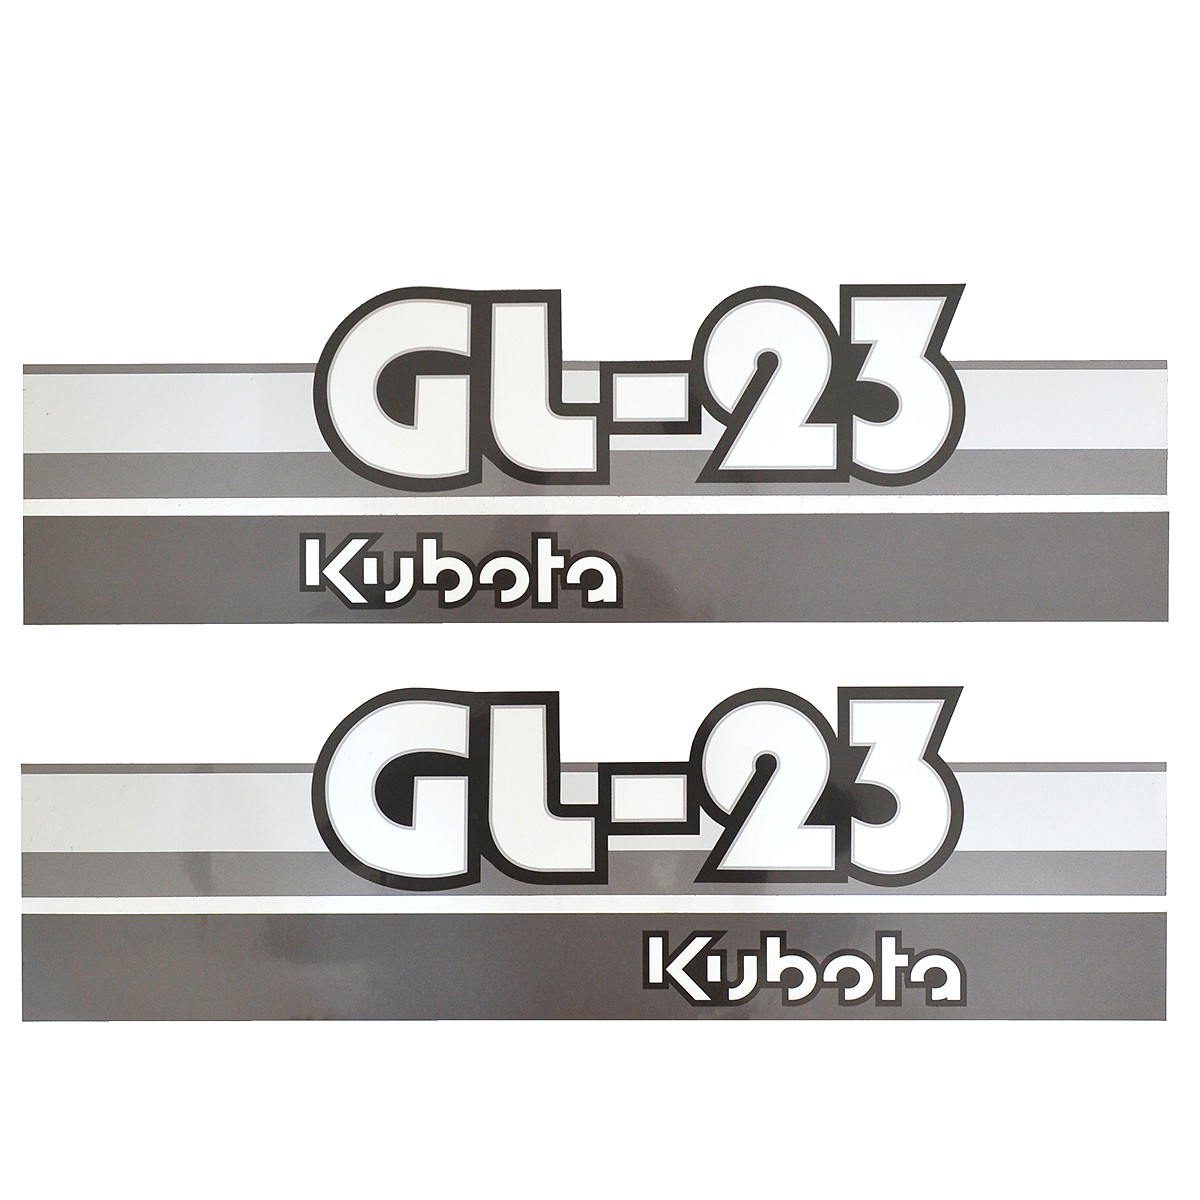 Samolepky Kubota GL23